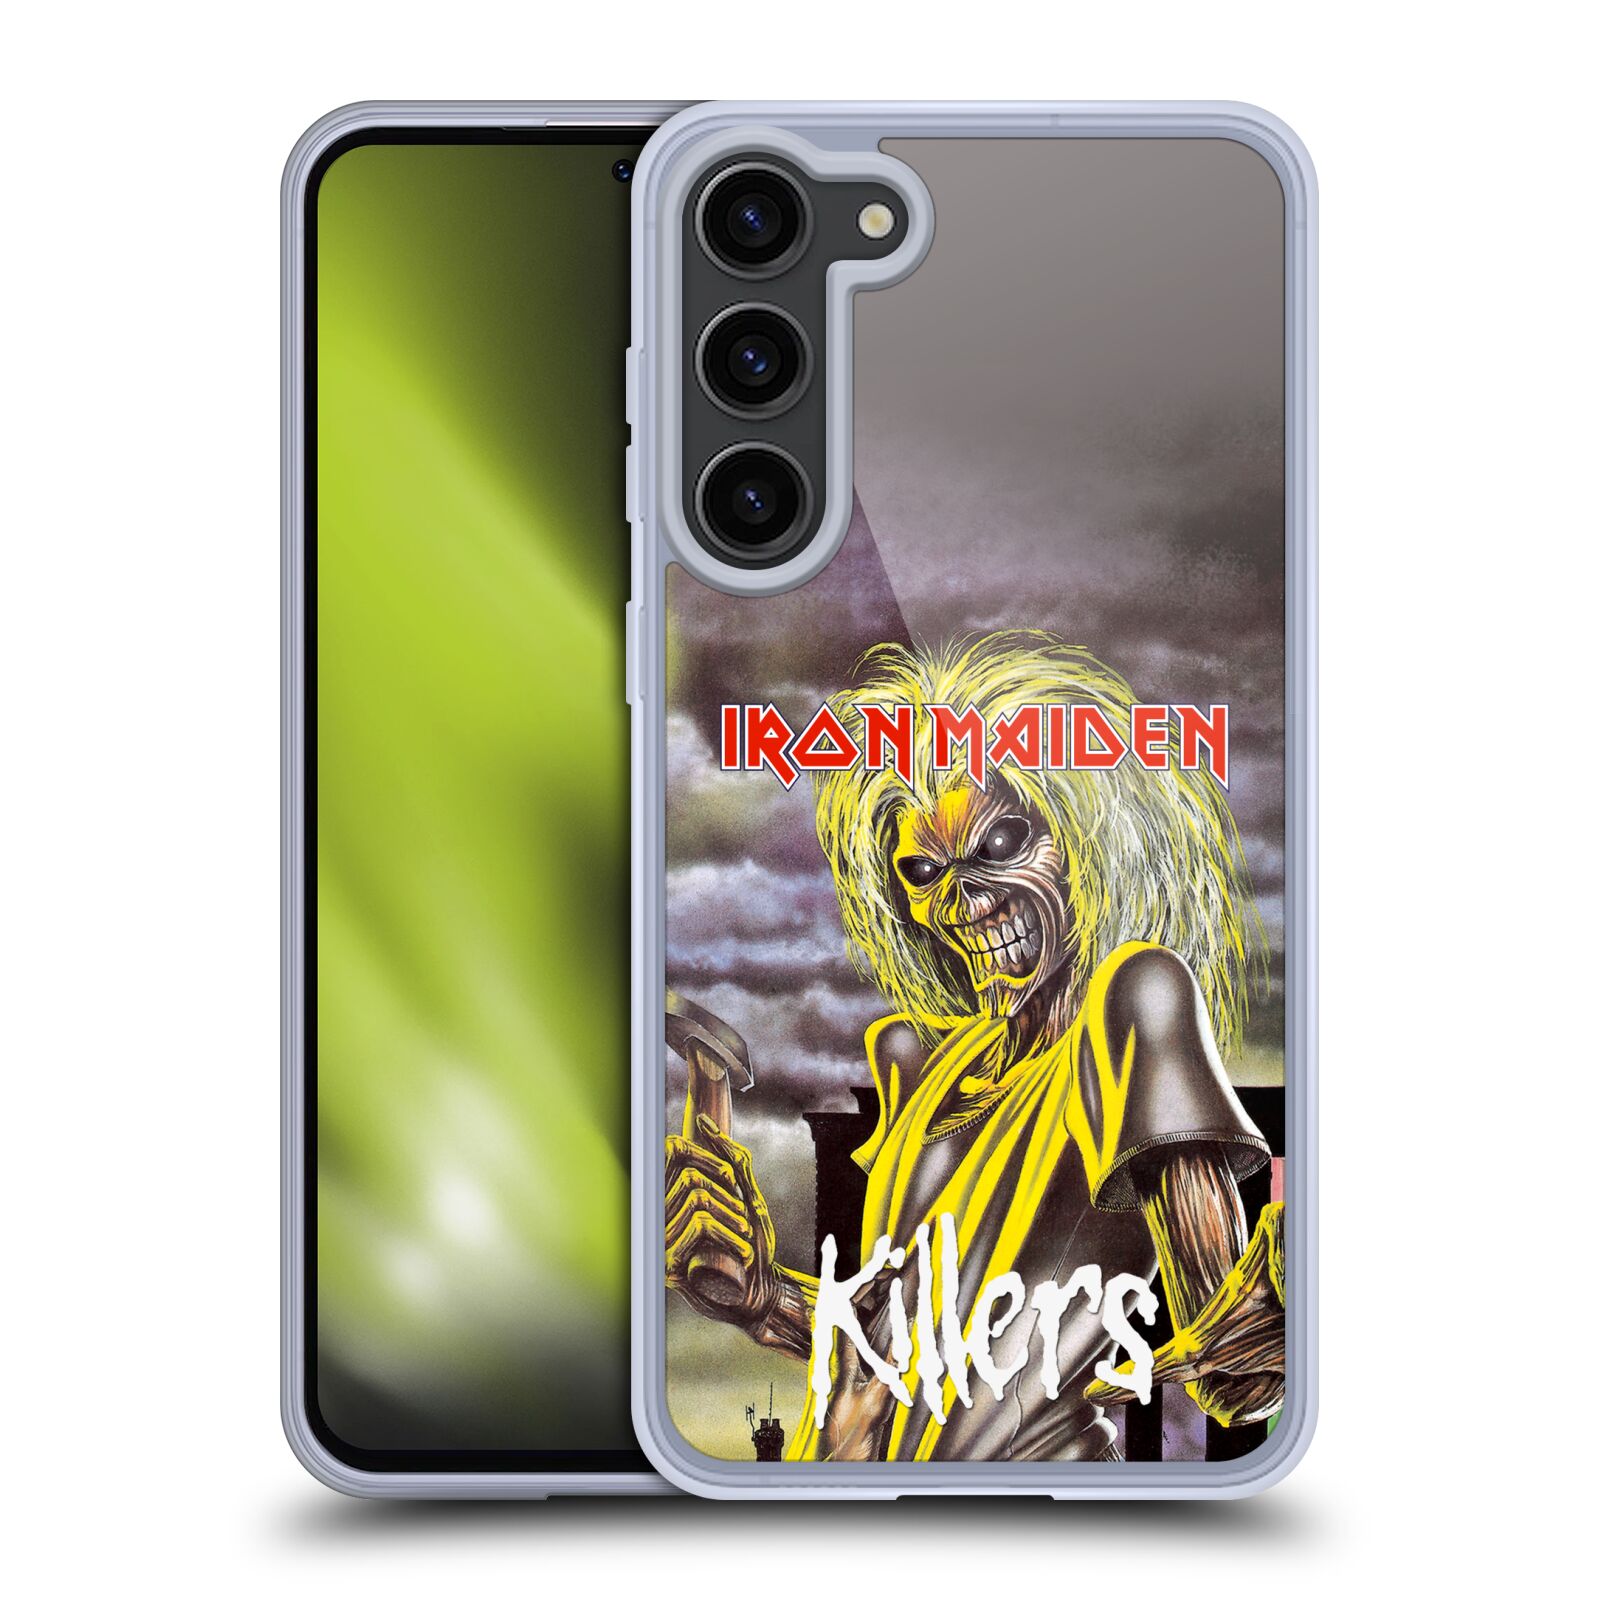 Silikonové pouzdro na mobil Samsung Galaxy S23 Plus - Head Case - Iron Maiden - Killers (Silikonový kryt, obal, pouzdro na mobilní telefon Samsung Galaxy S23 Plus s motivem Iron Maiden - Killers)